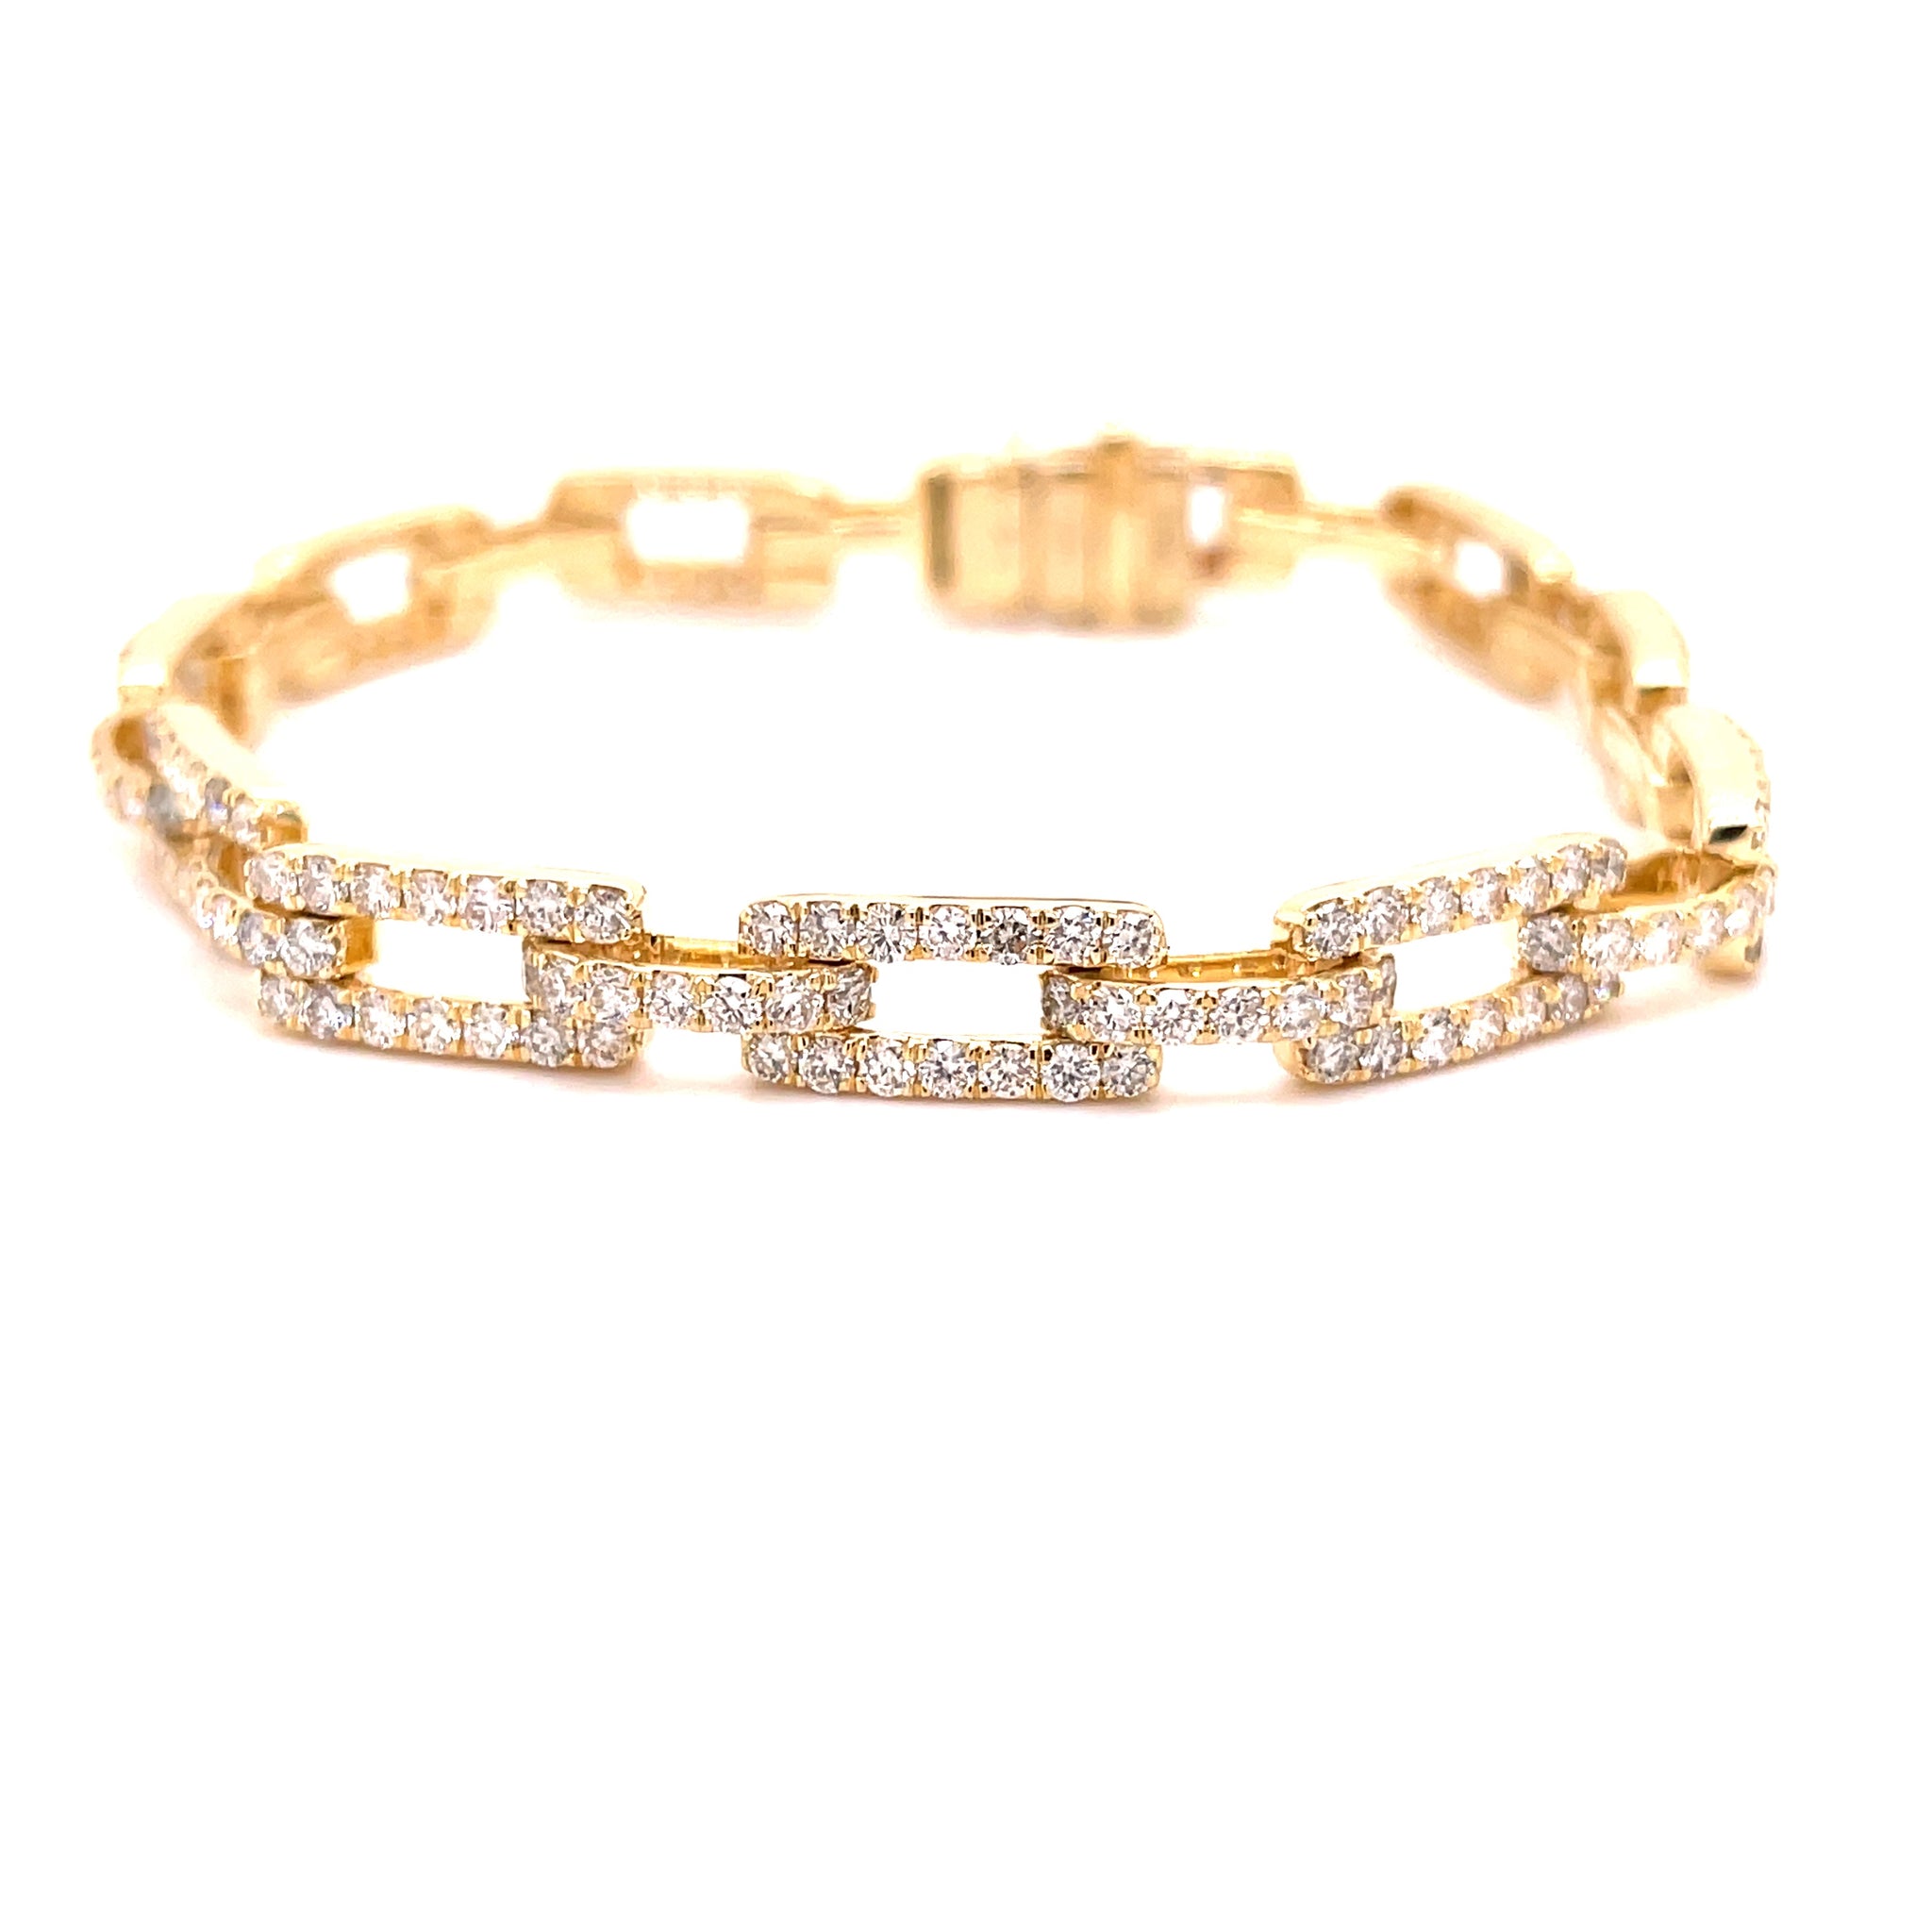 Yellow Gold Diamond Cable Bracelet 5.33ct